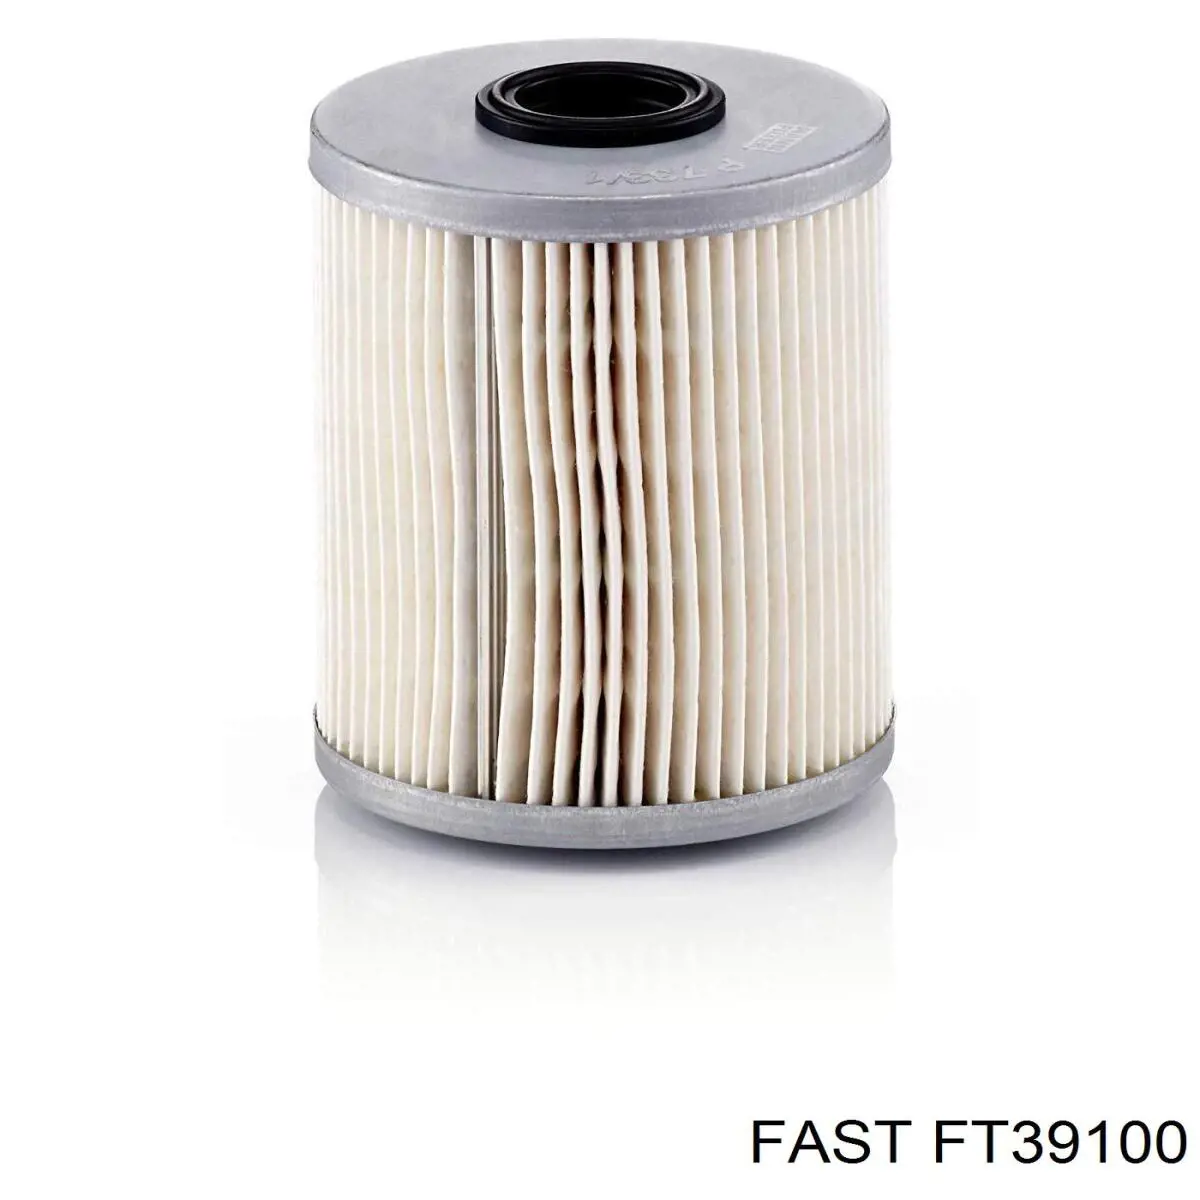 FT39100 Fast filtro de combustible